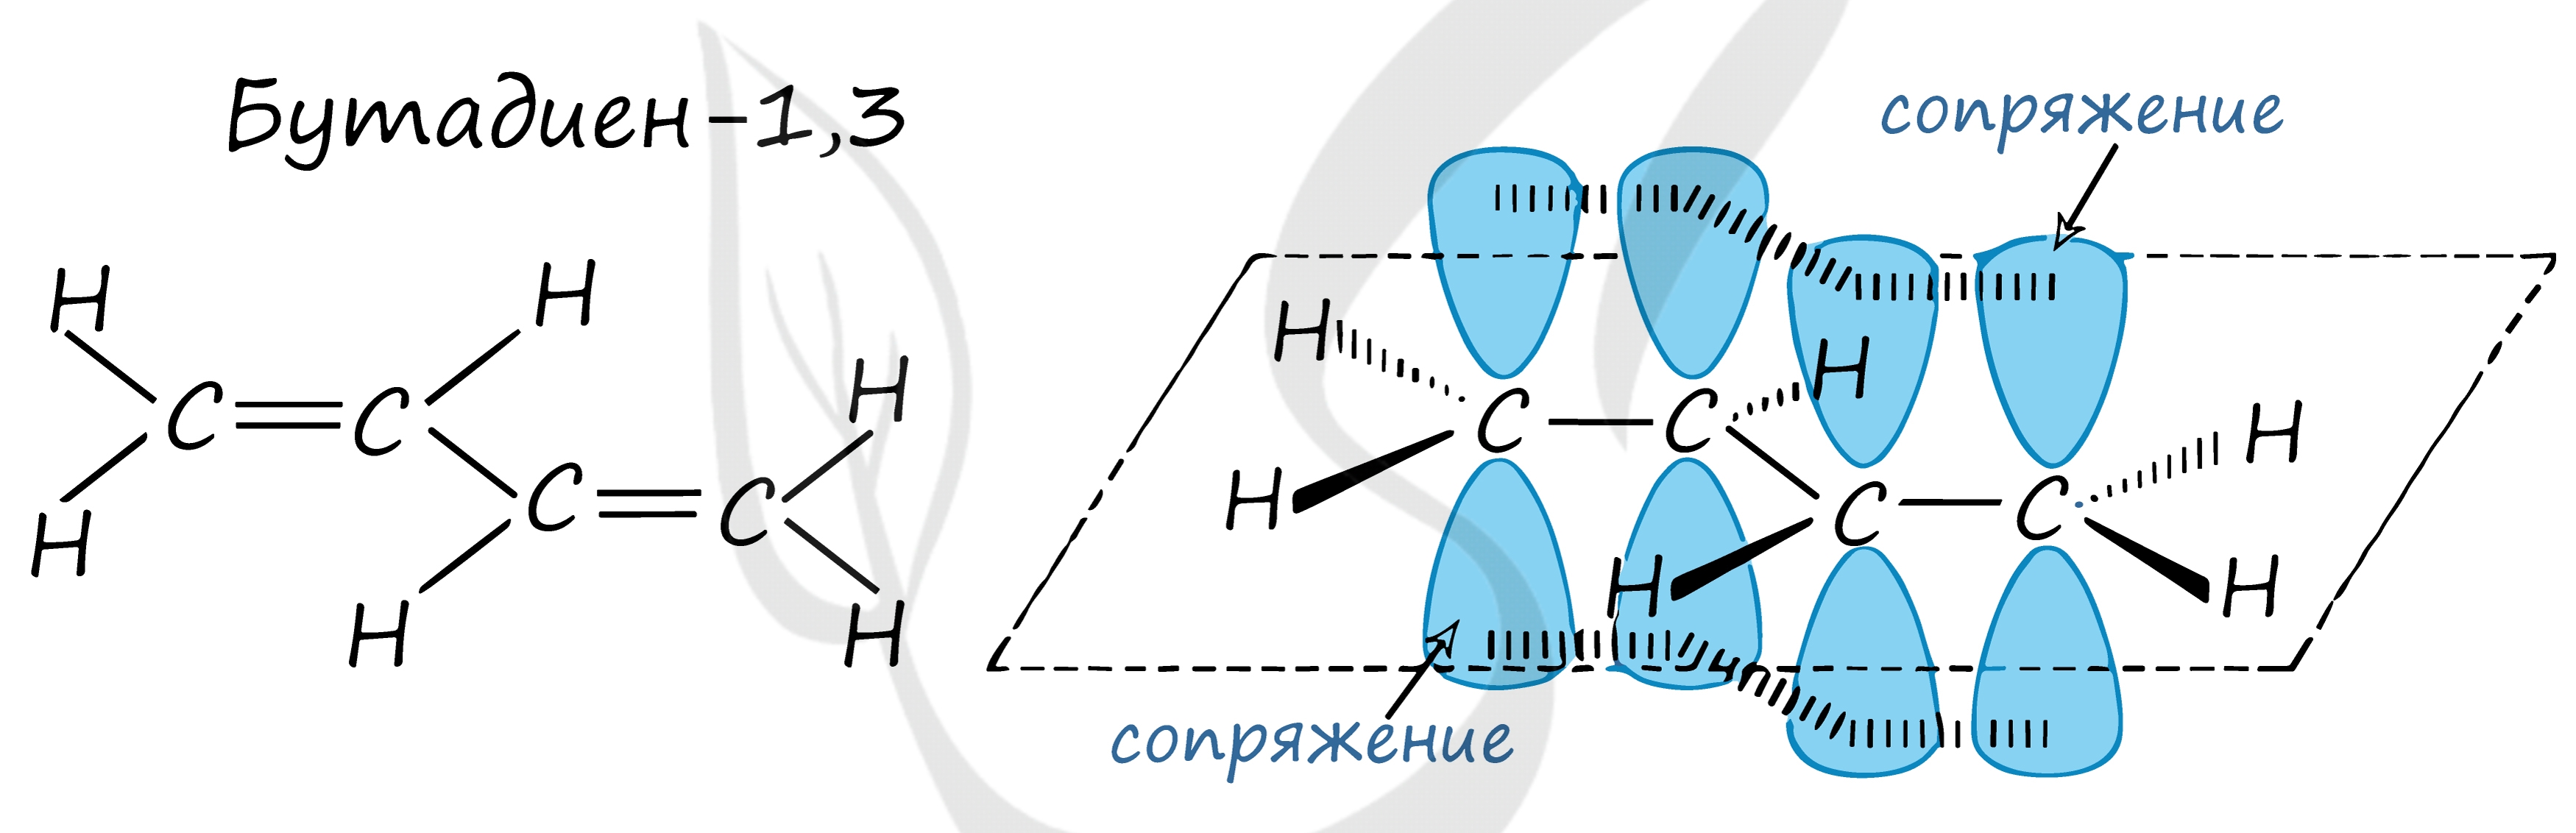 Бутадиен 2 3 гибридизация. Строение молекулы бутадиена 1.3. Электронное строение молекулы бутадиена-1.3. Бутадиен строение молекулы. Схема бутадиена 1.3.